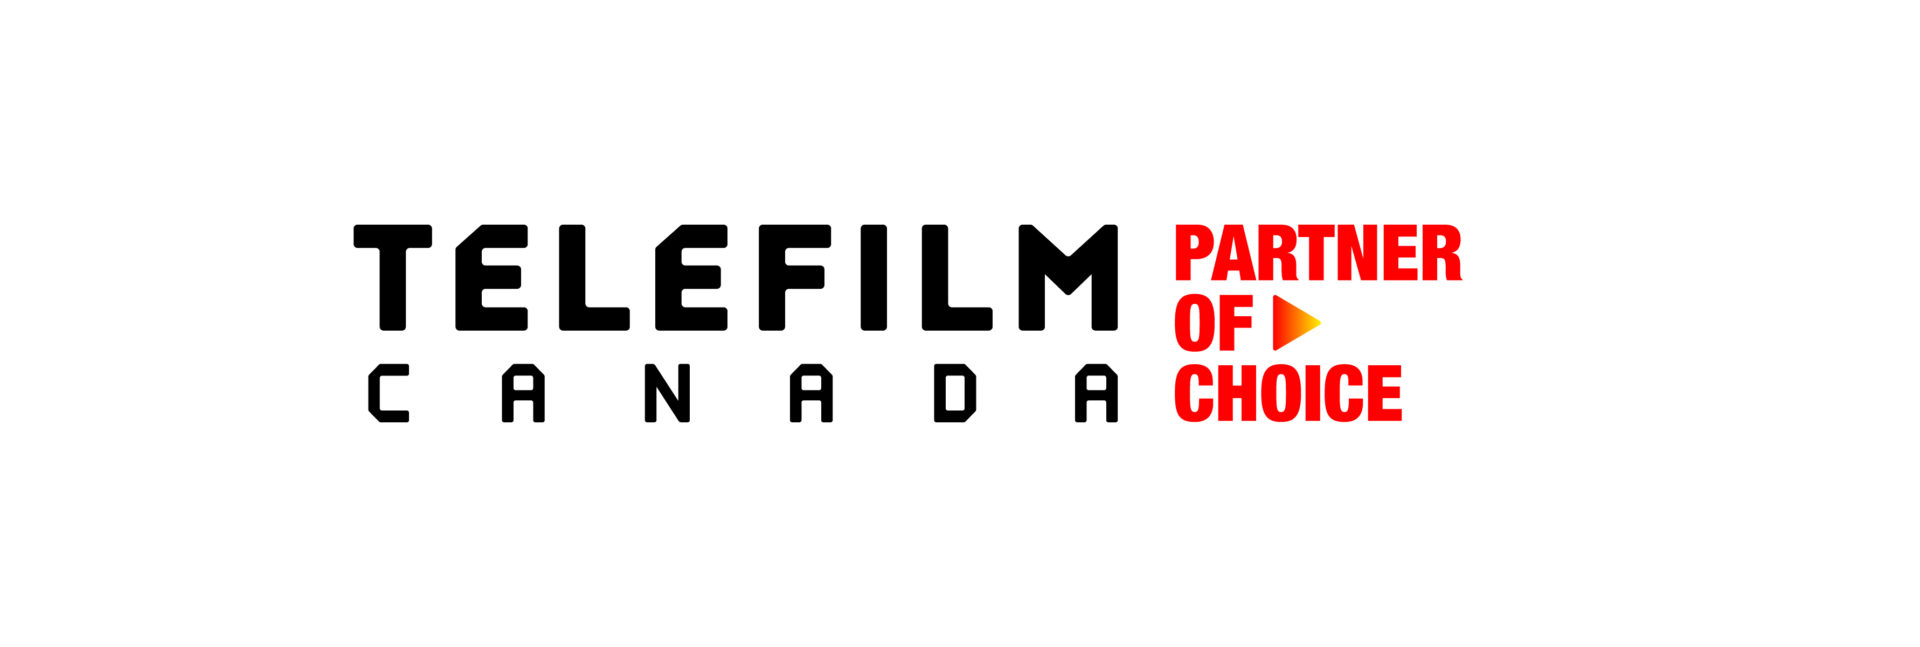 Telefilm Canada. Partner of Choice